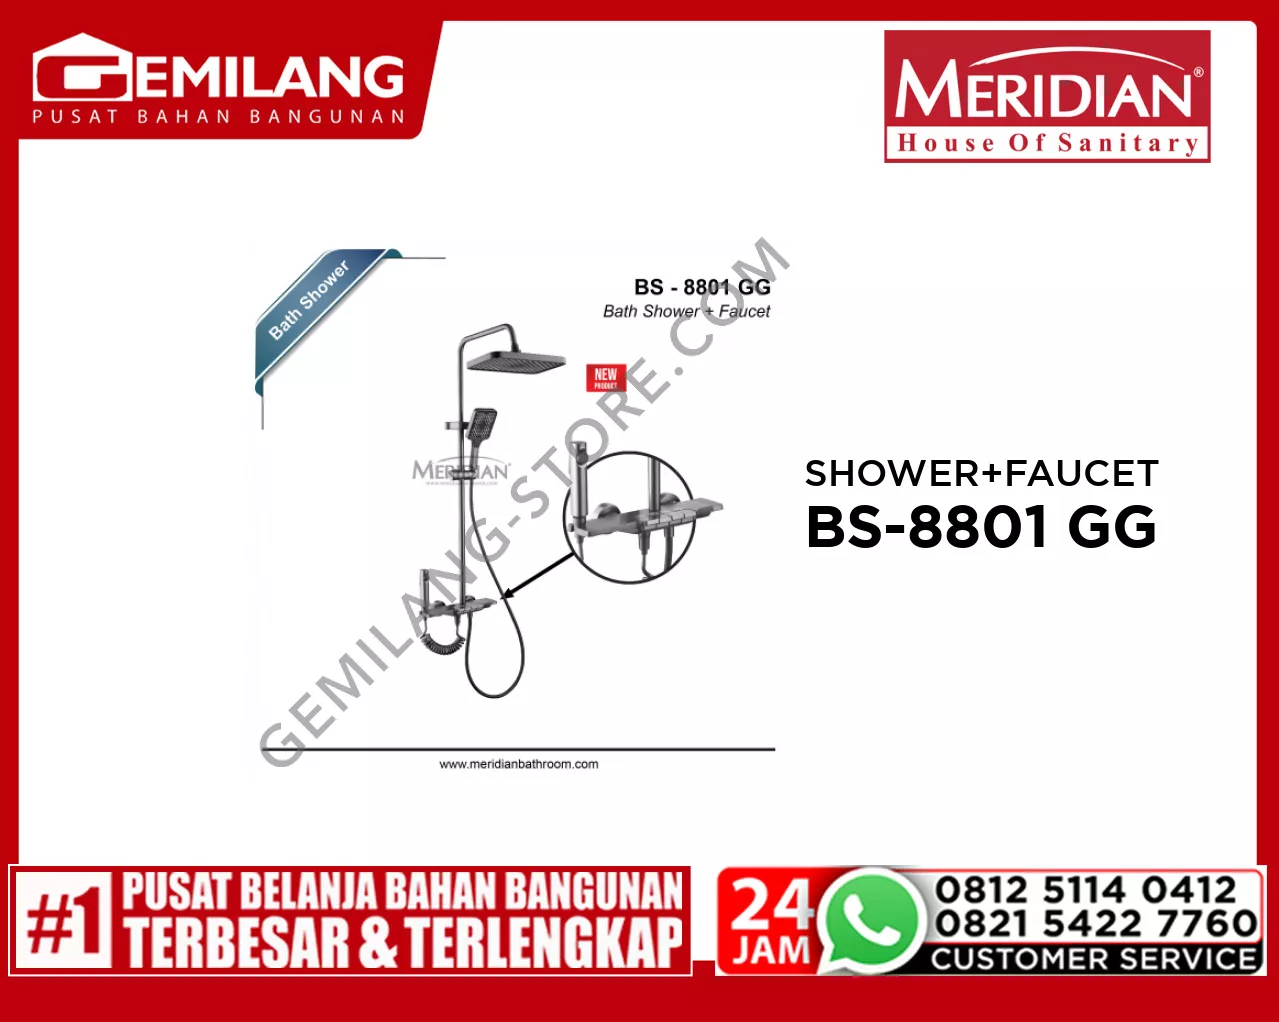 MERIDIAN BATH SHOWER + FAUCET BS-8801 GG